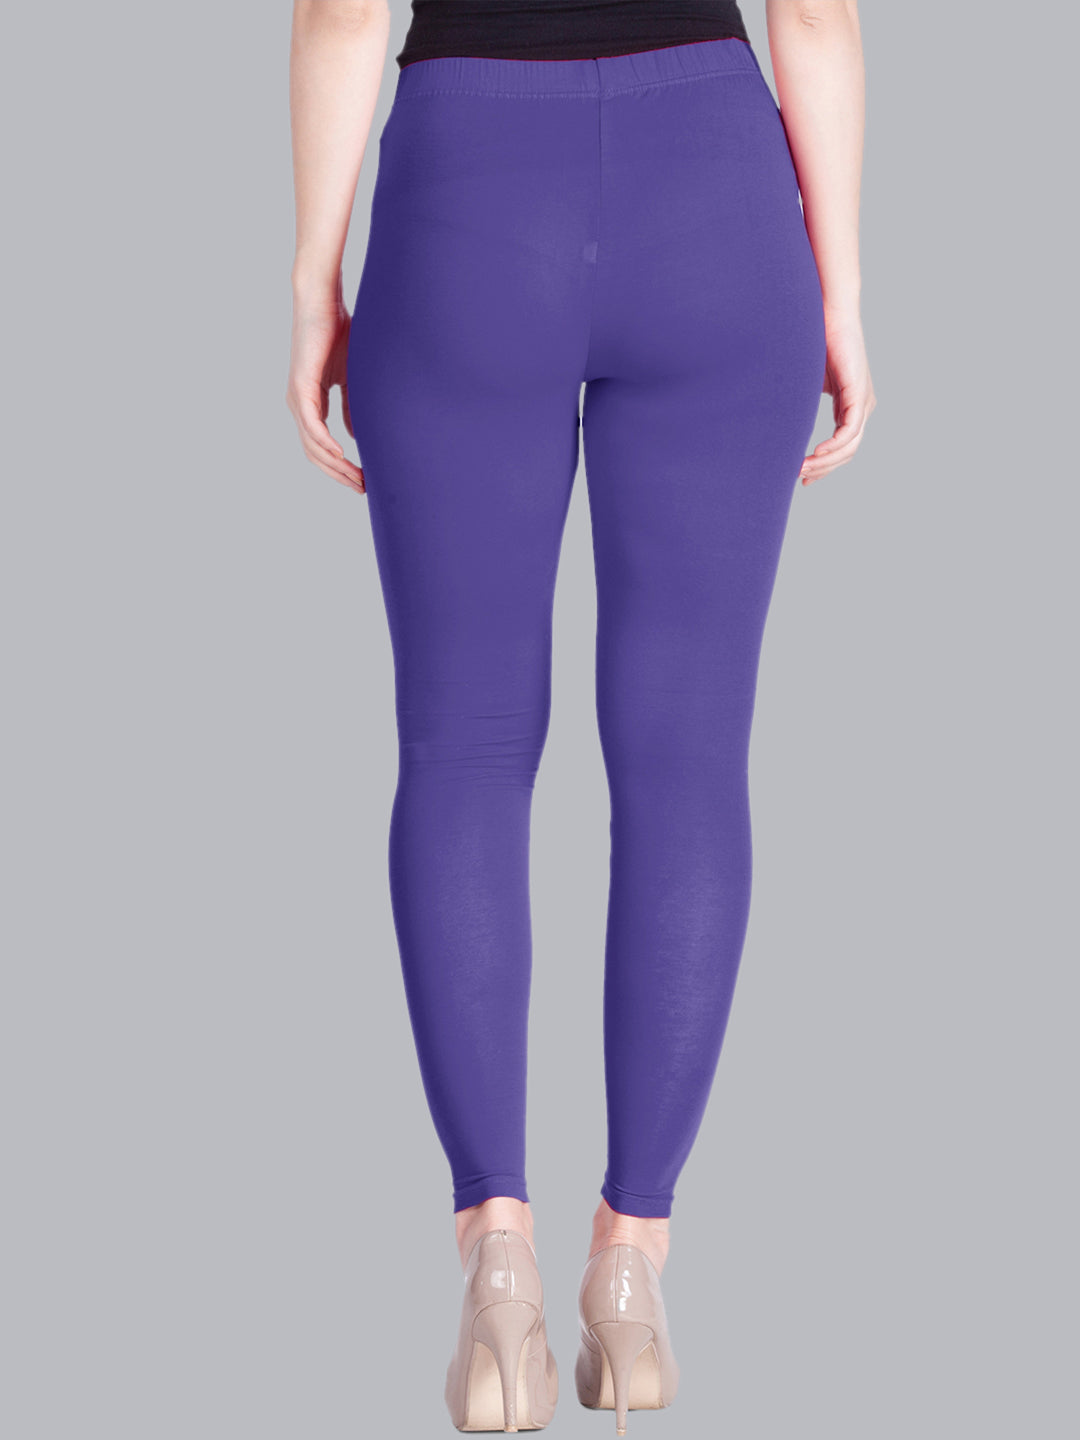 Purple Lycra Cotton Ladies Capri Legging, Size: Small, Medium, Large, XL at  Rs 125 in Panipat